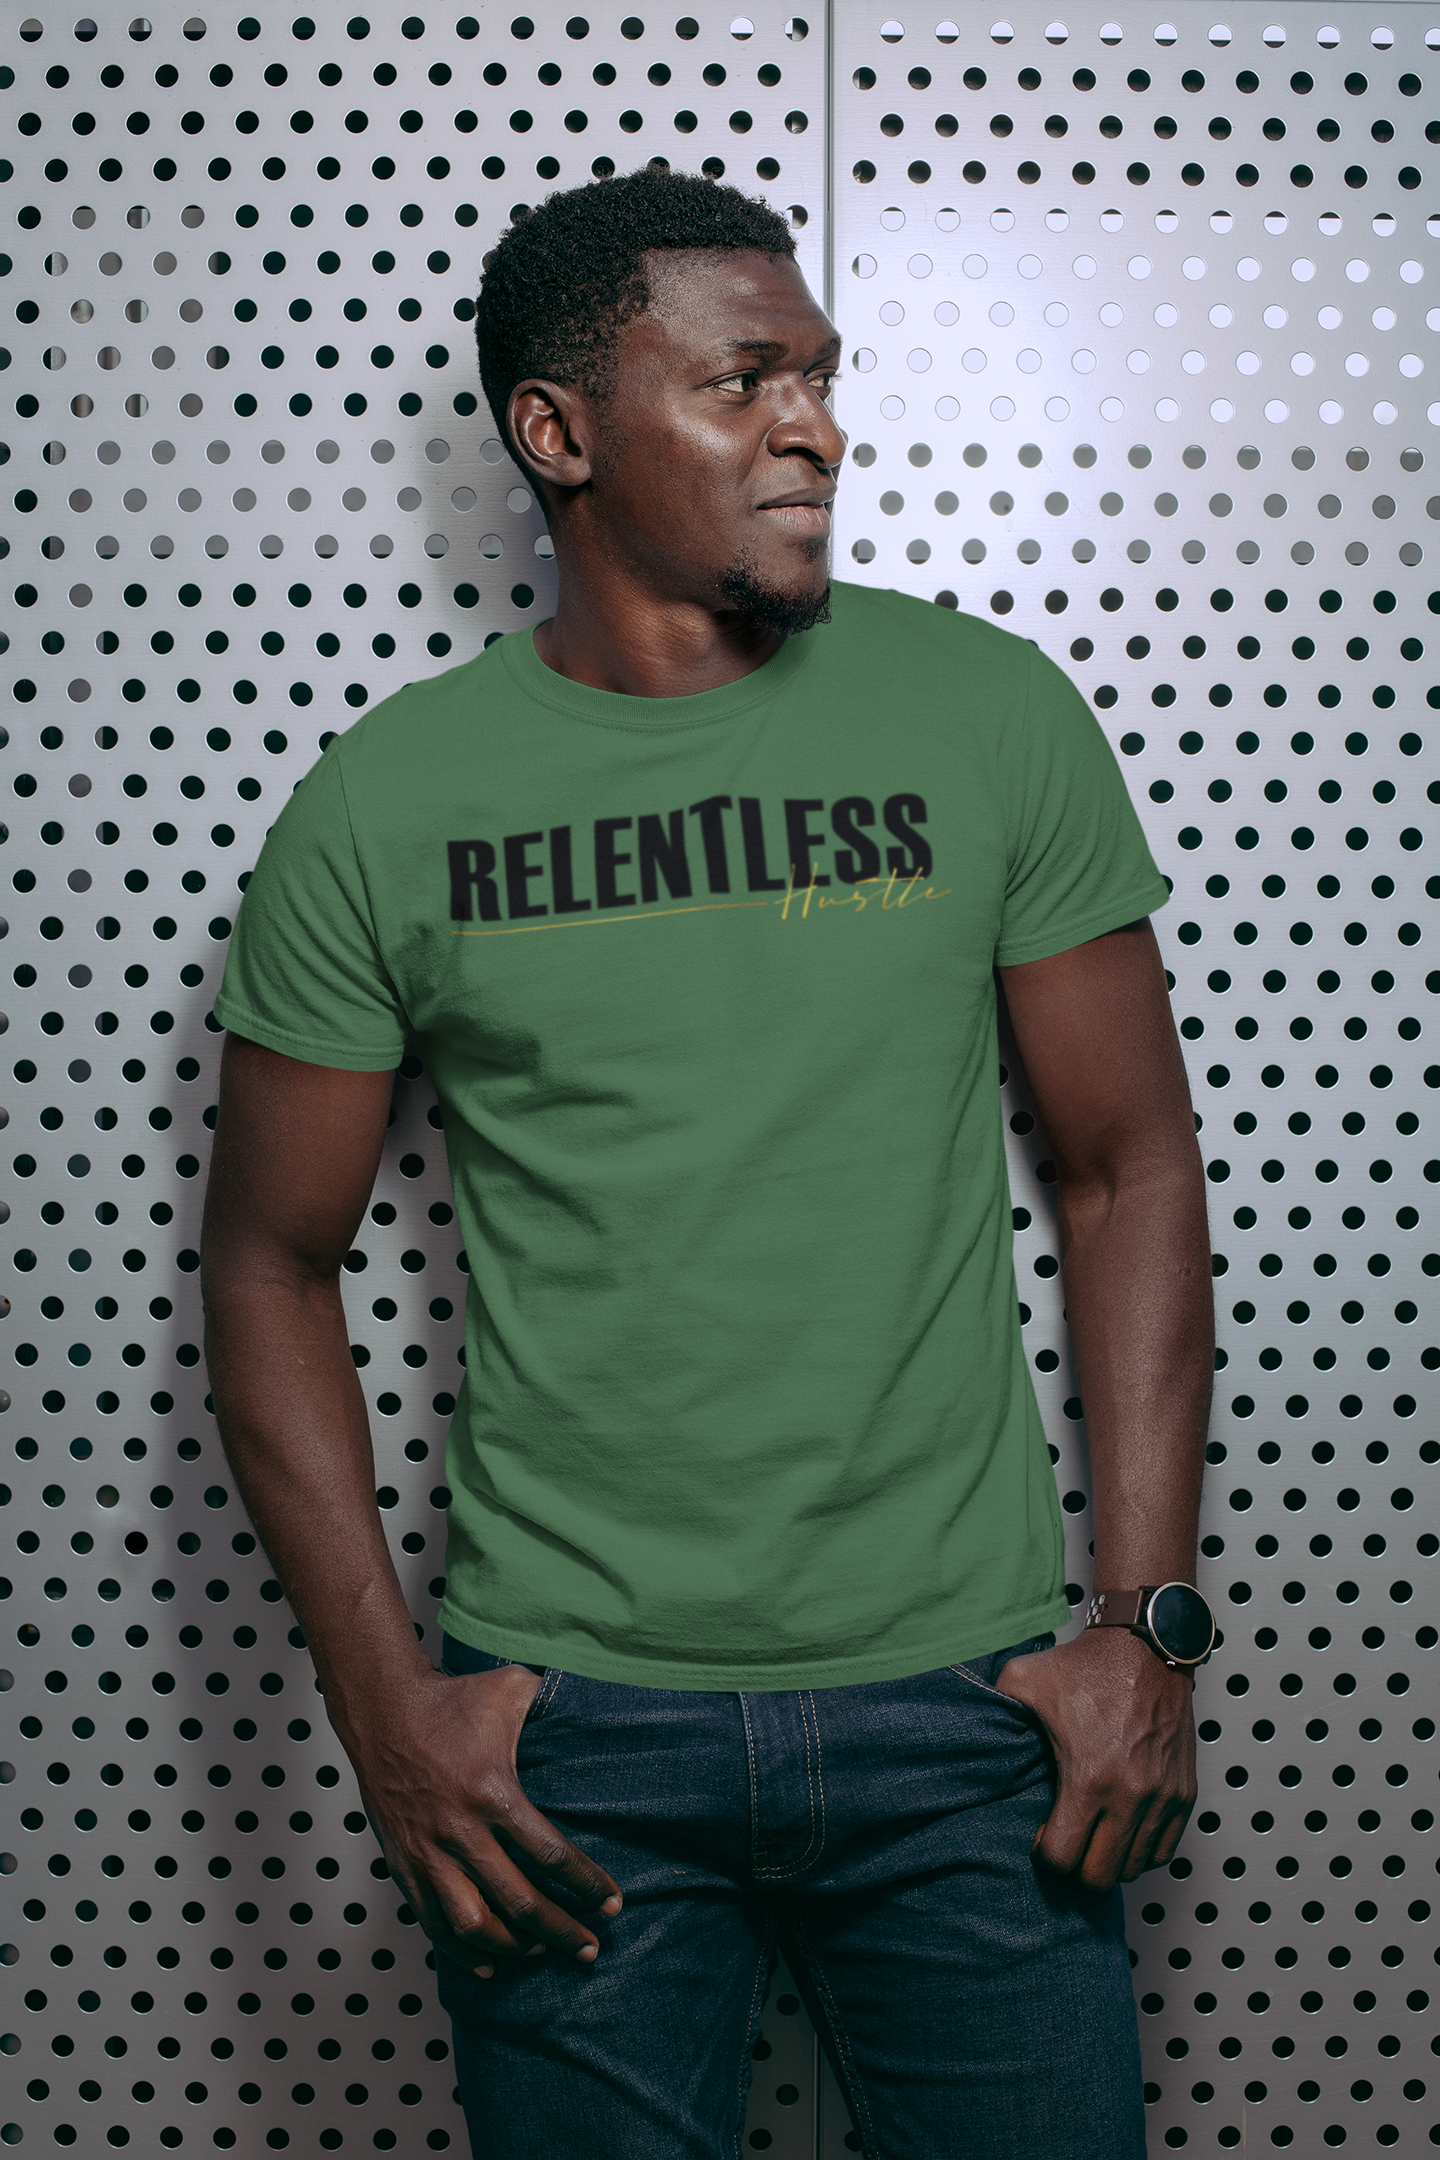 Relentless Shirts